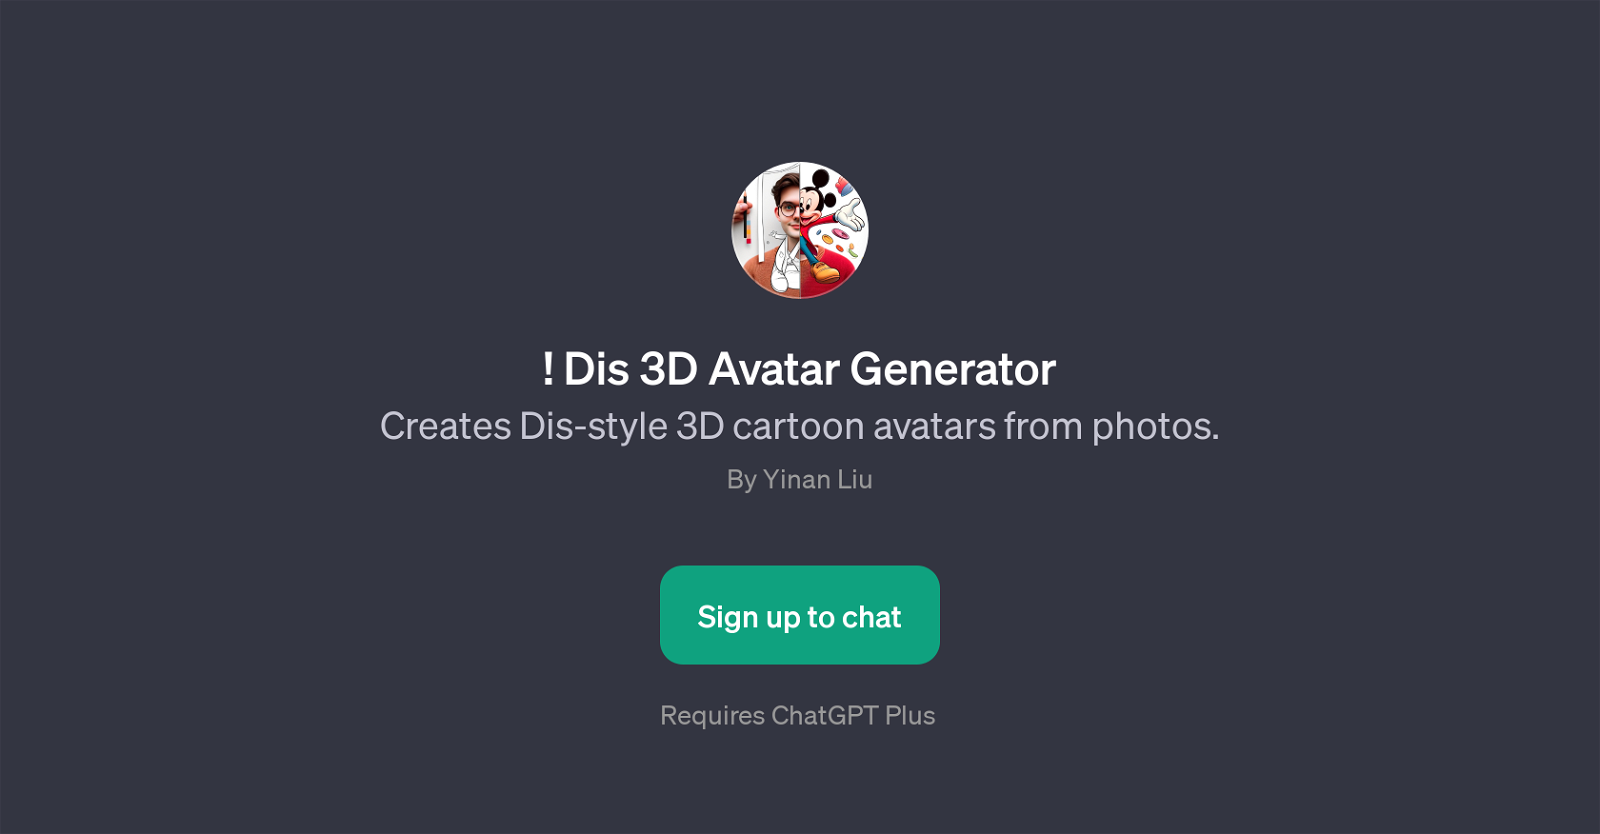 ! Dis 3D Avatar Generator website